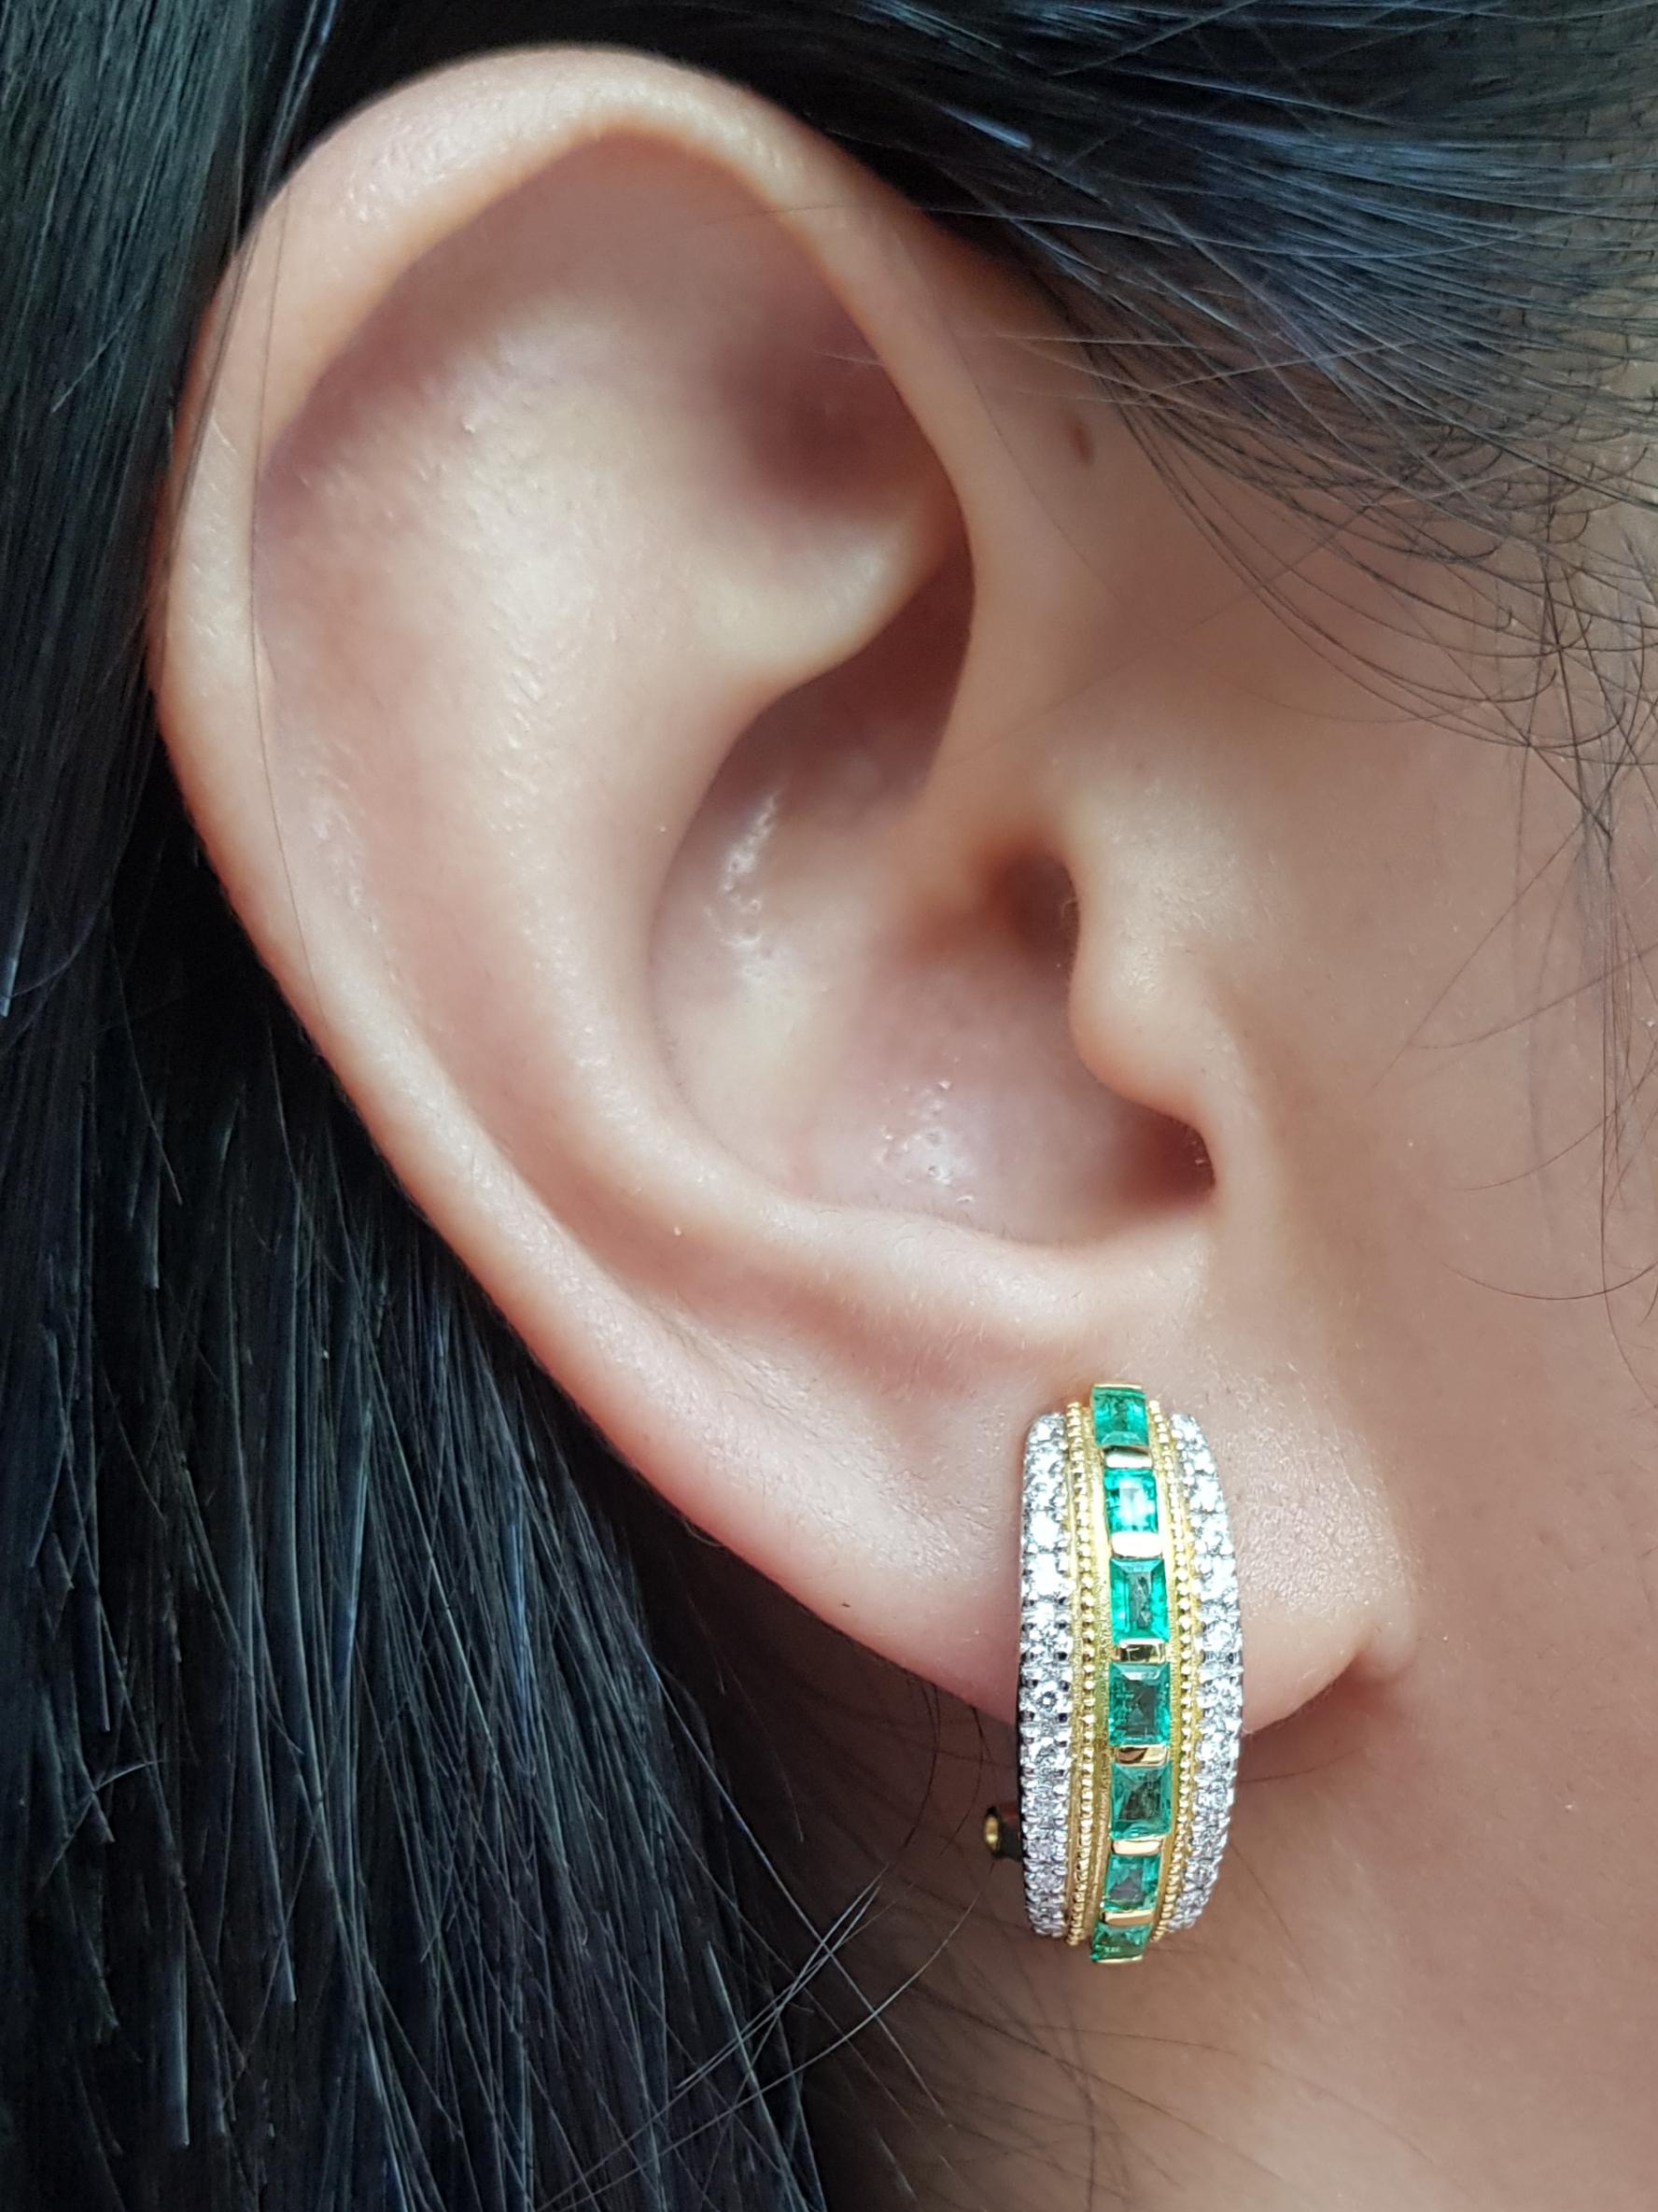 Emerald 1.20 carats with Diamond 0.43 carat Earrings set in 18 Karat Gold Settings

Width:  0.8 cm 
Length: 2.1 cm
Total Weight: 12.04 grams

